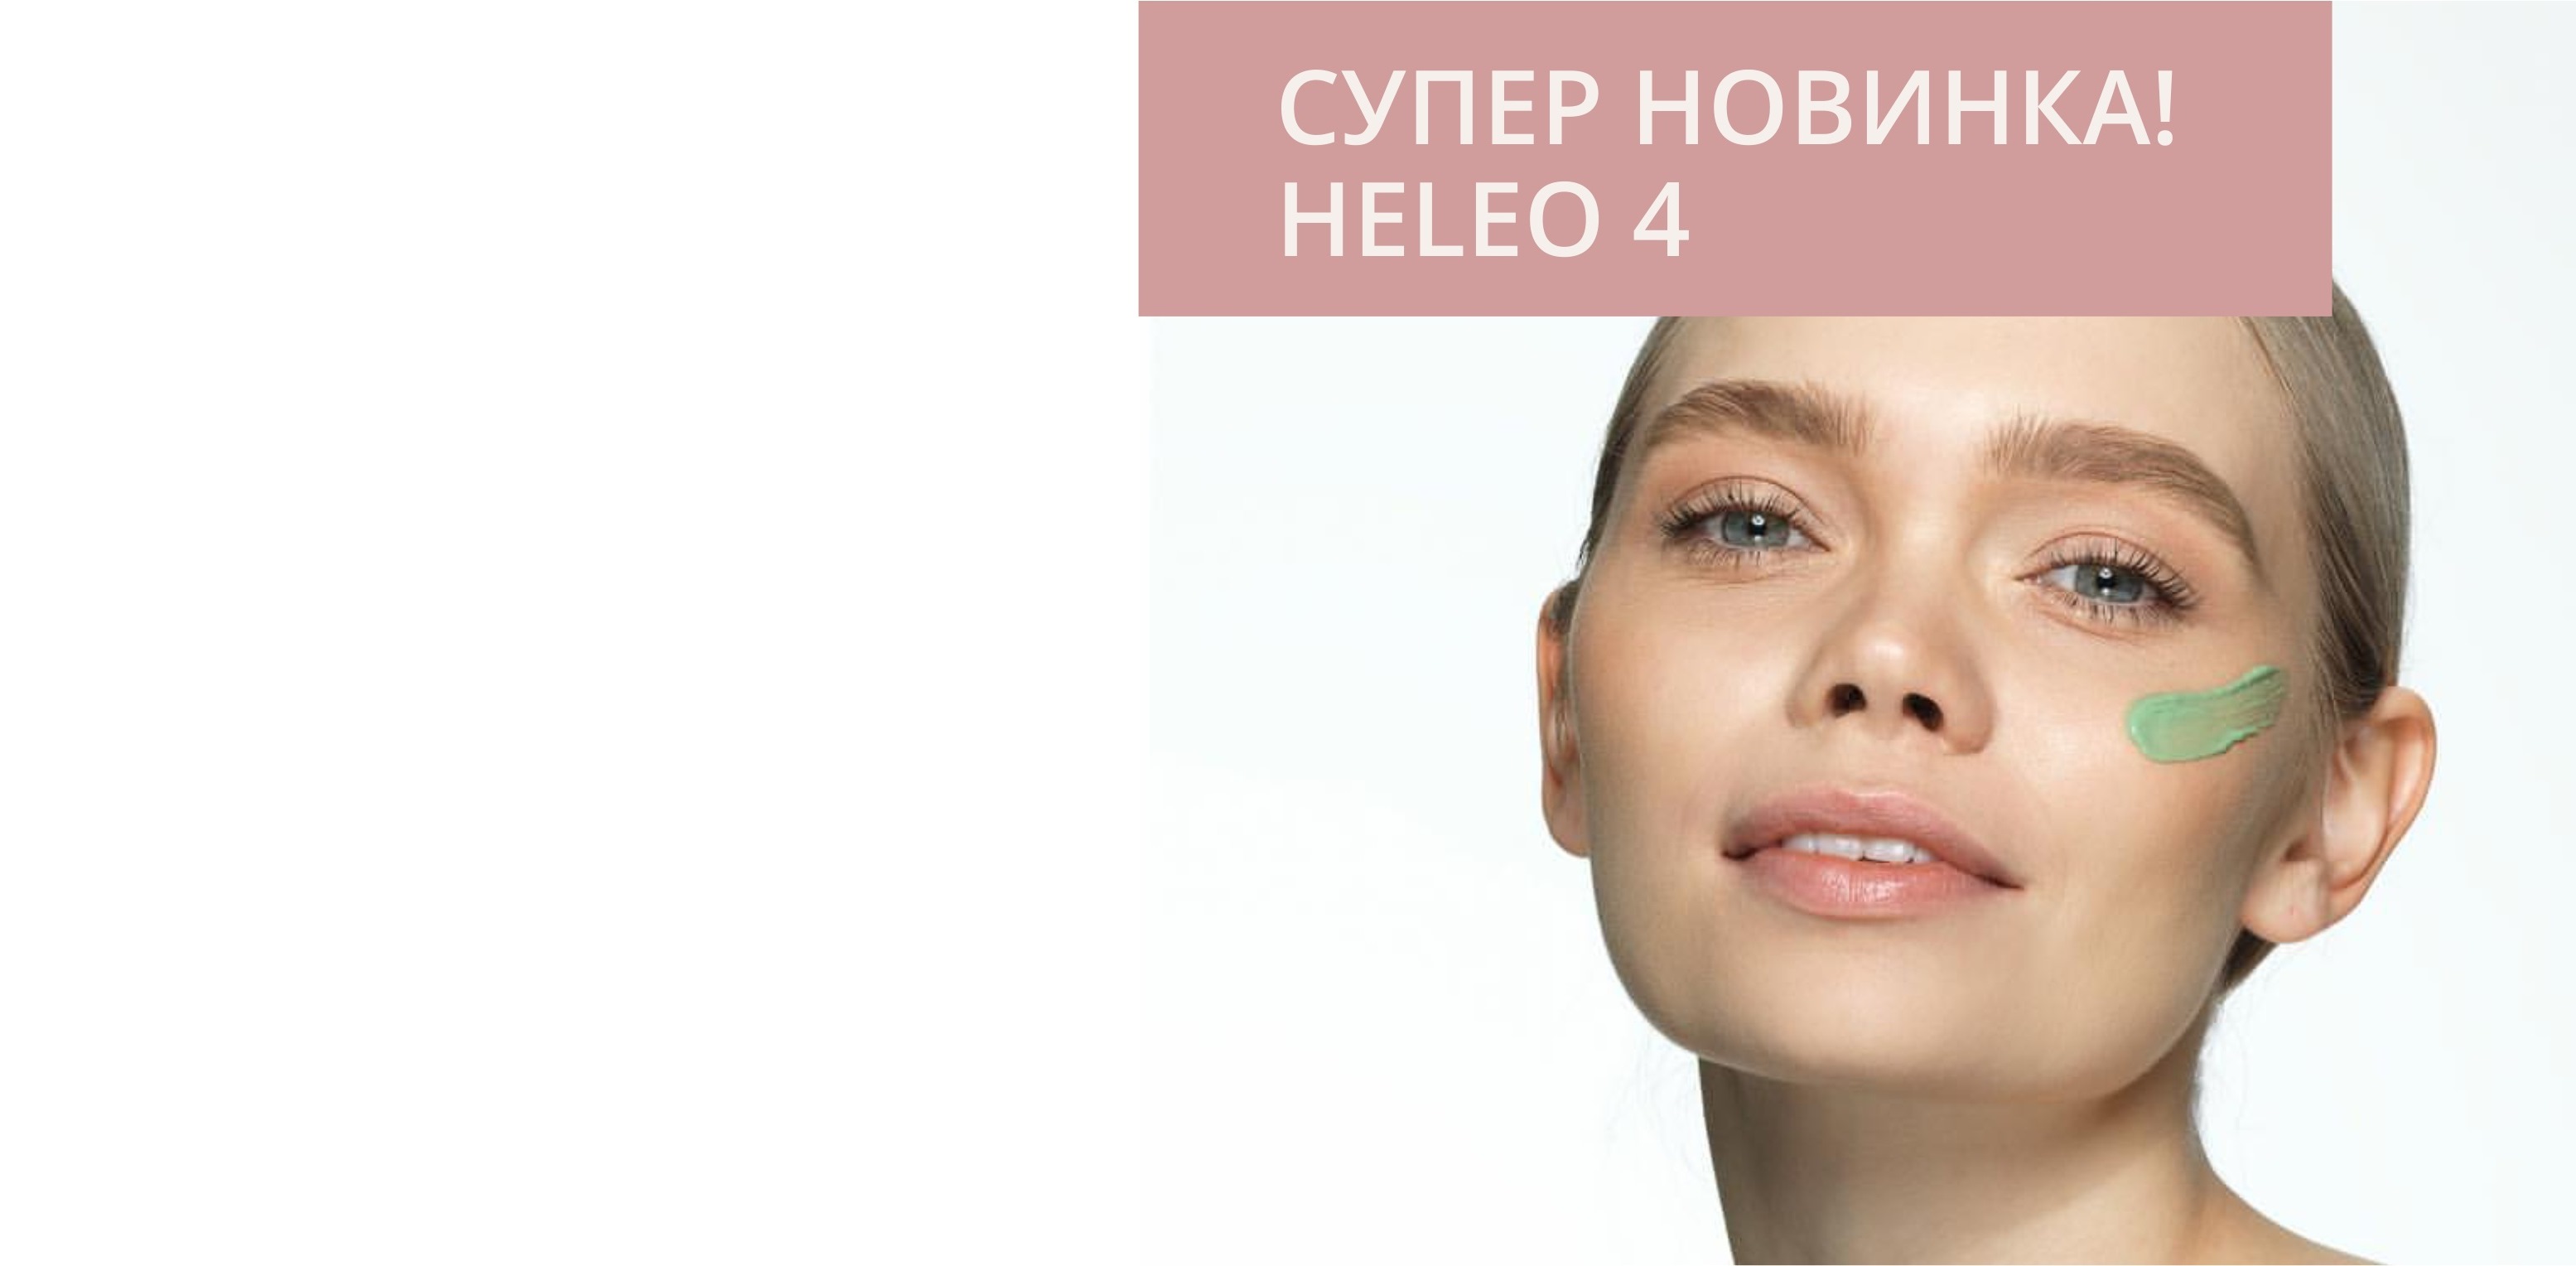 heleo4-1